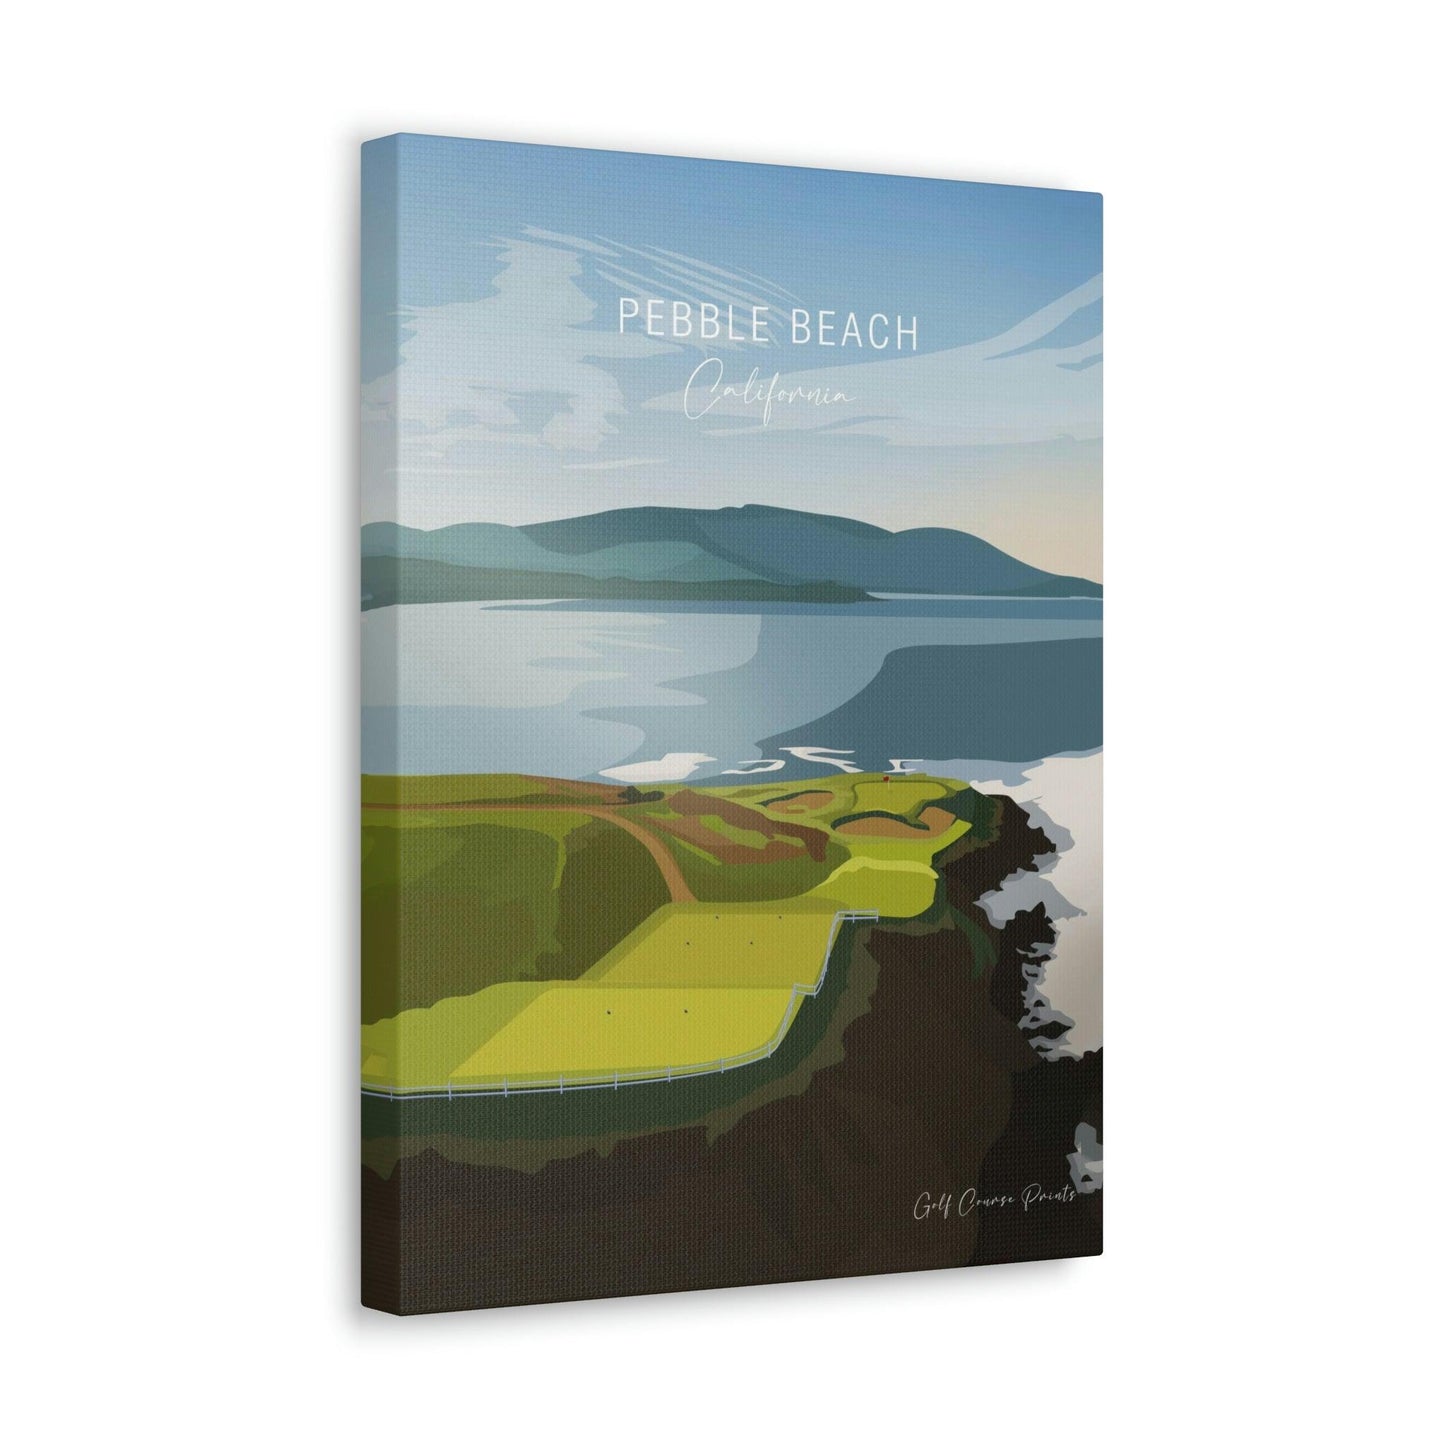 Pebble Beach, California by Golf Course Prints